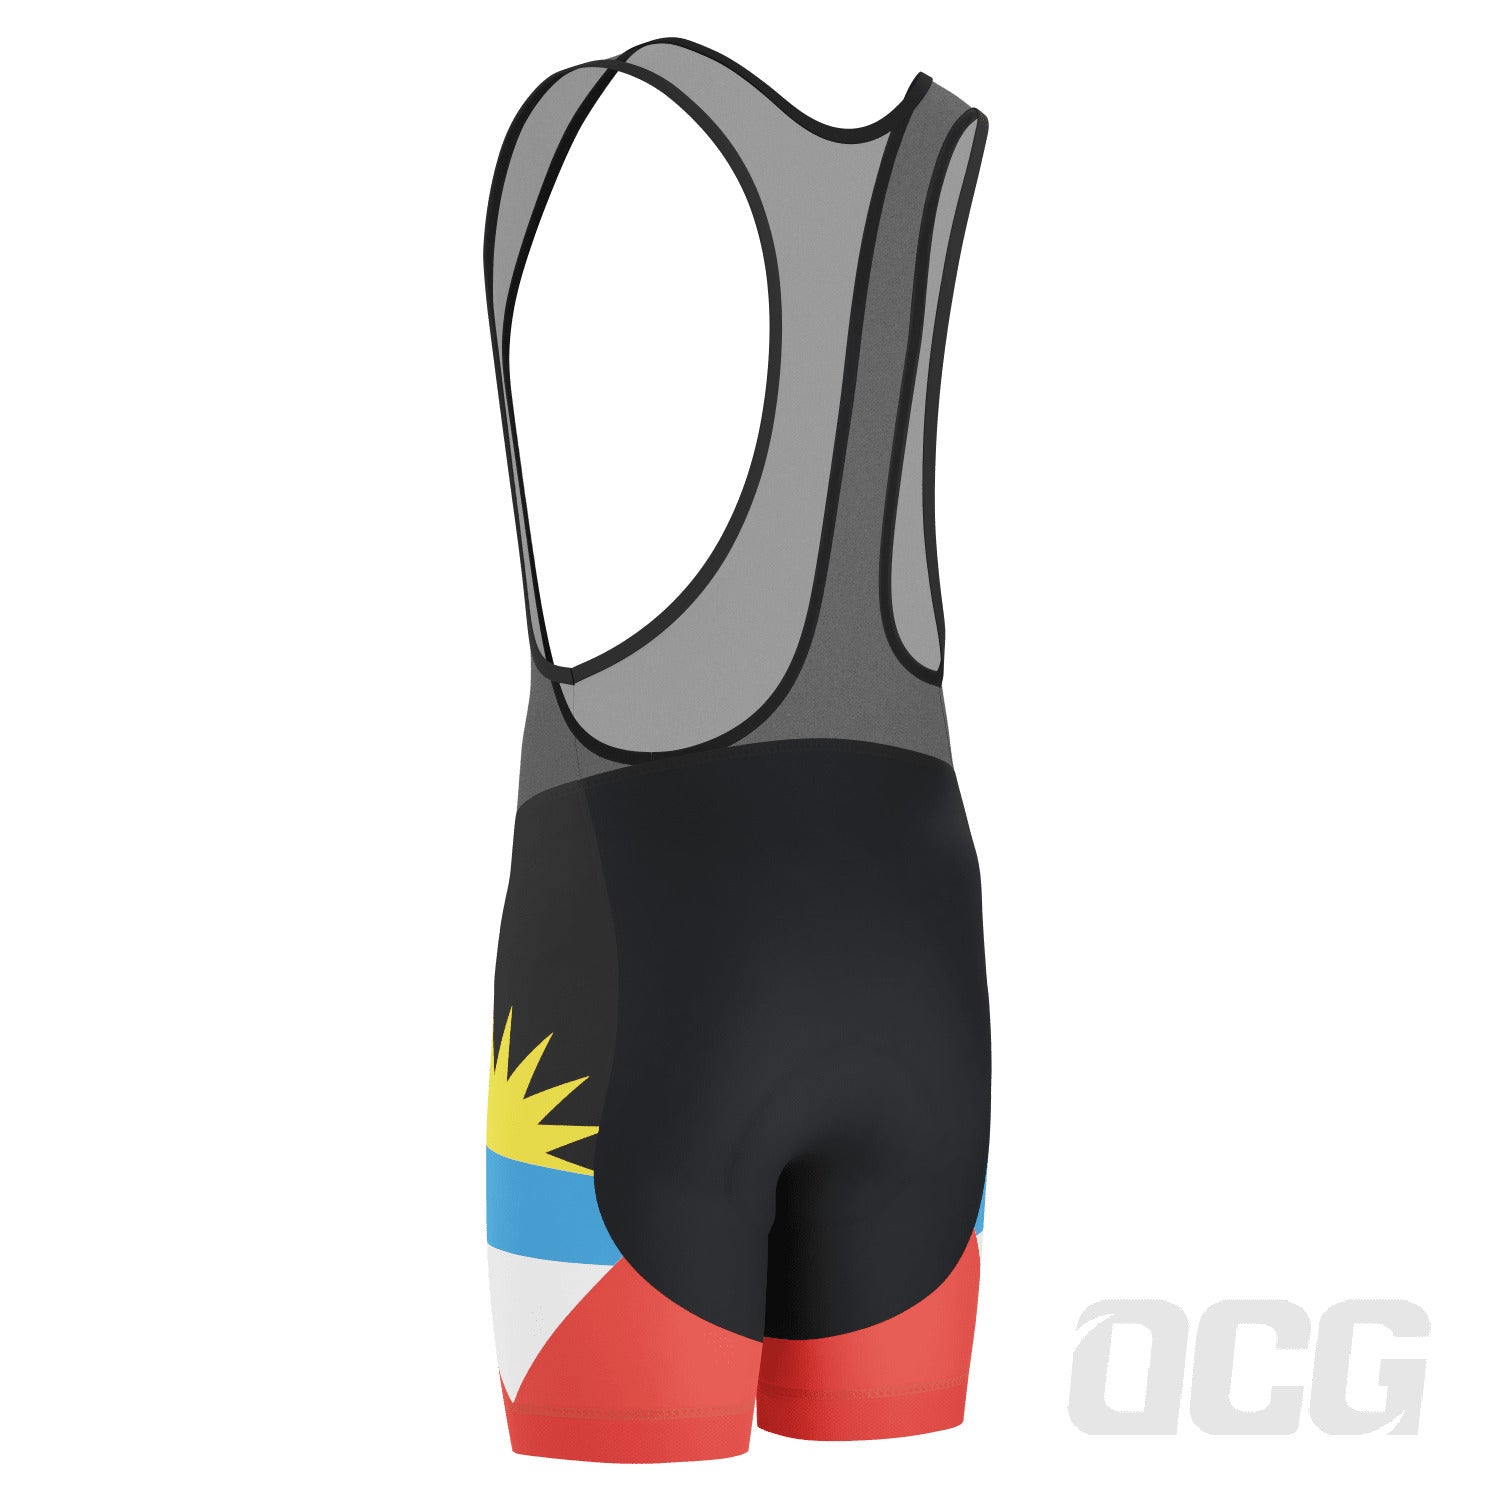 Men's Barbuda and Antigua Gel Padded Cycling Bib